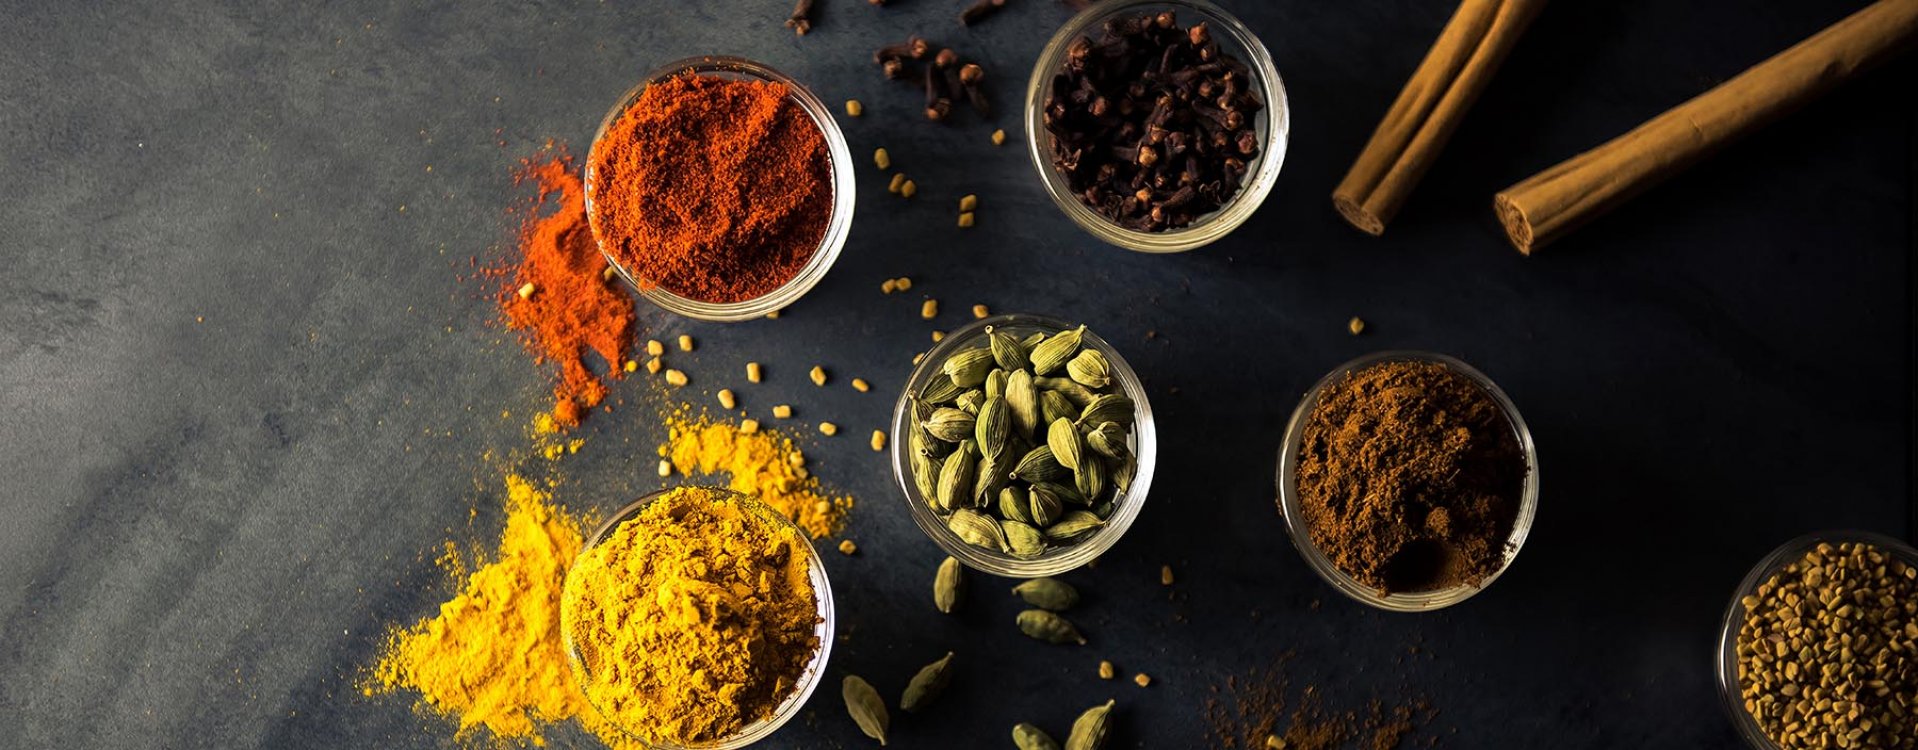 Sri lanka, spices